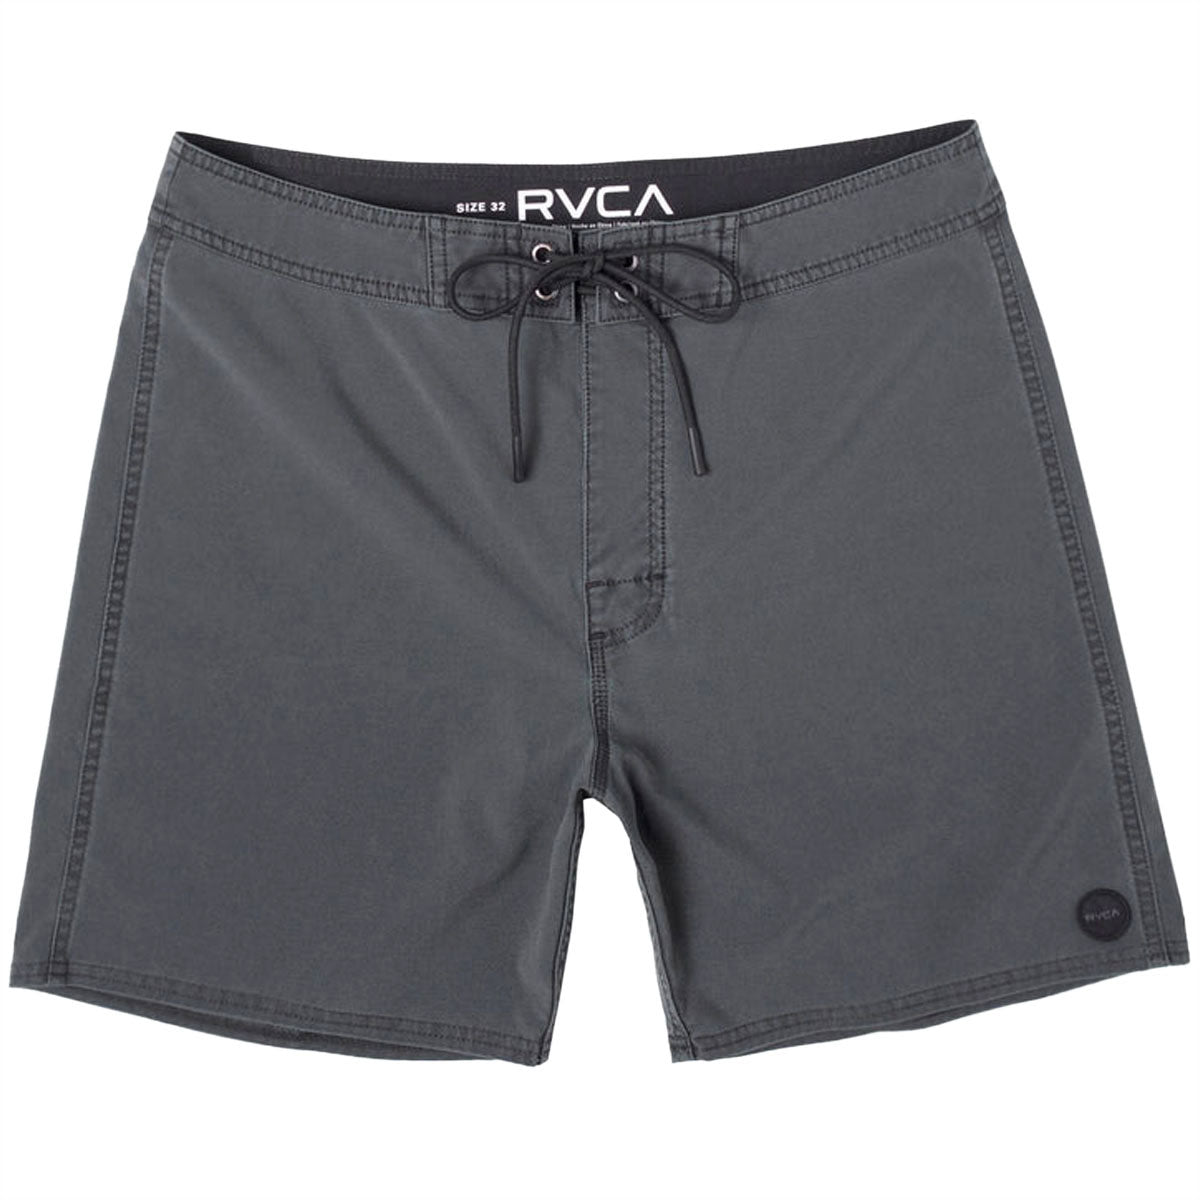 RVCA Va Pigment Board Shorts - Black image 1